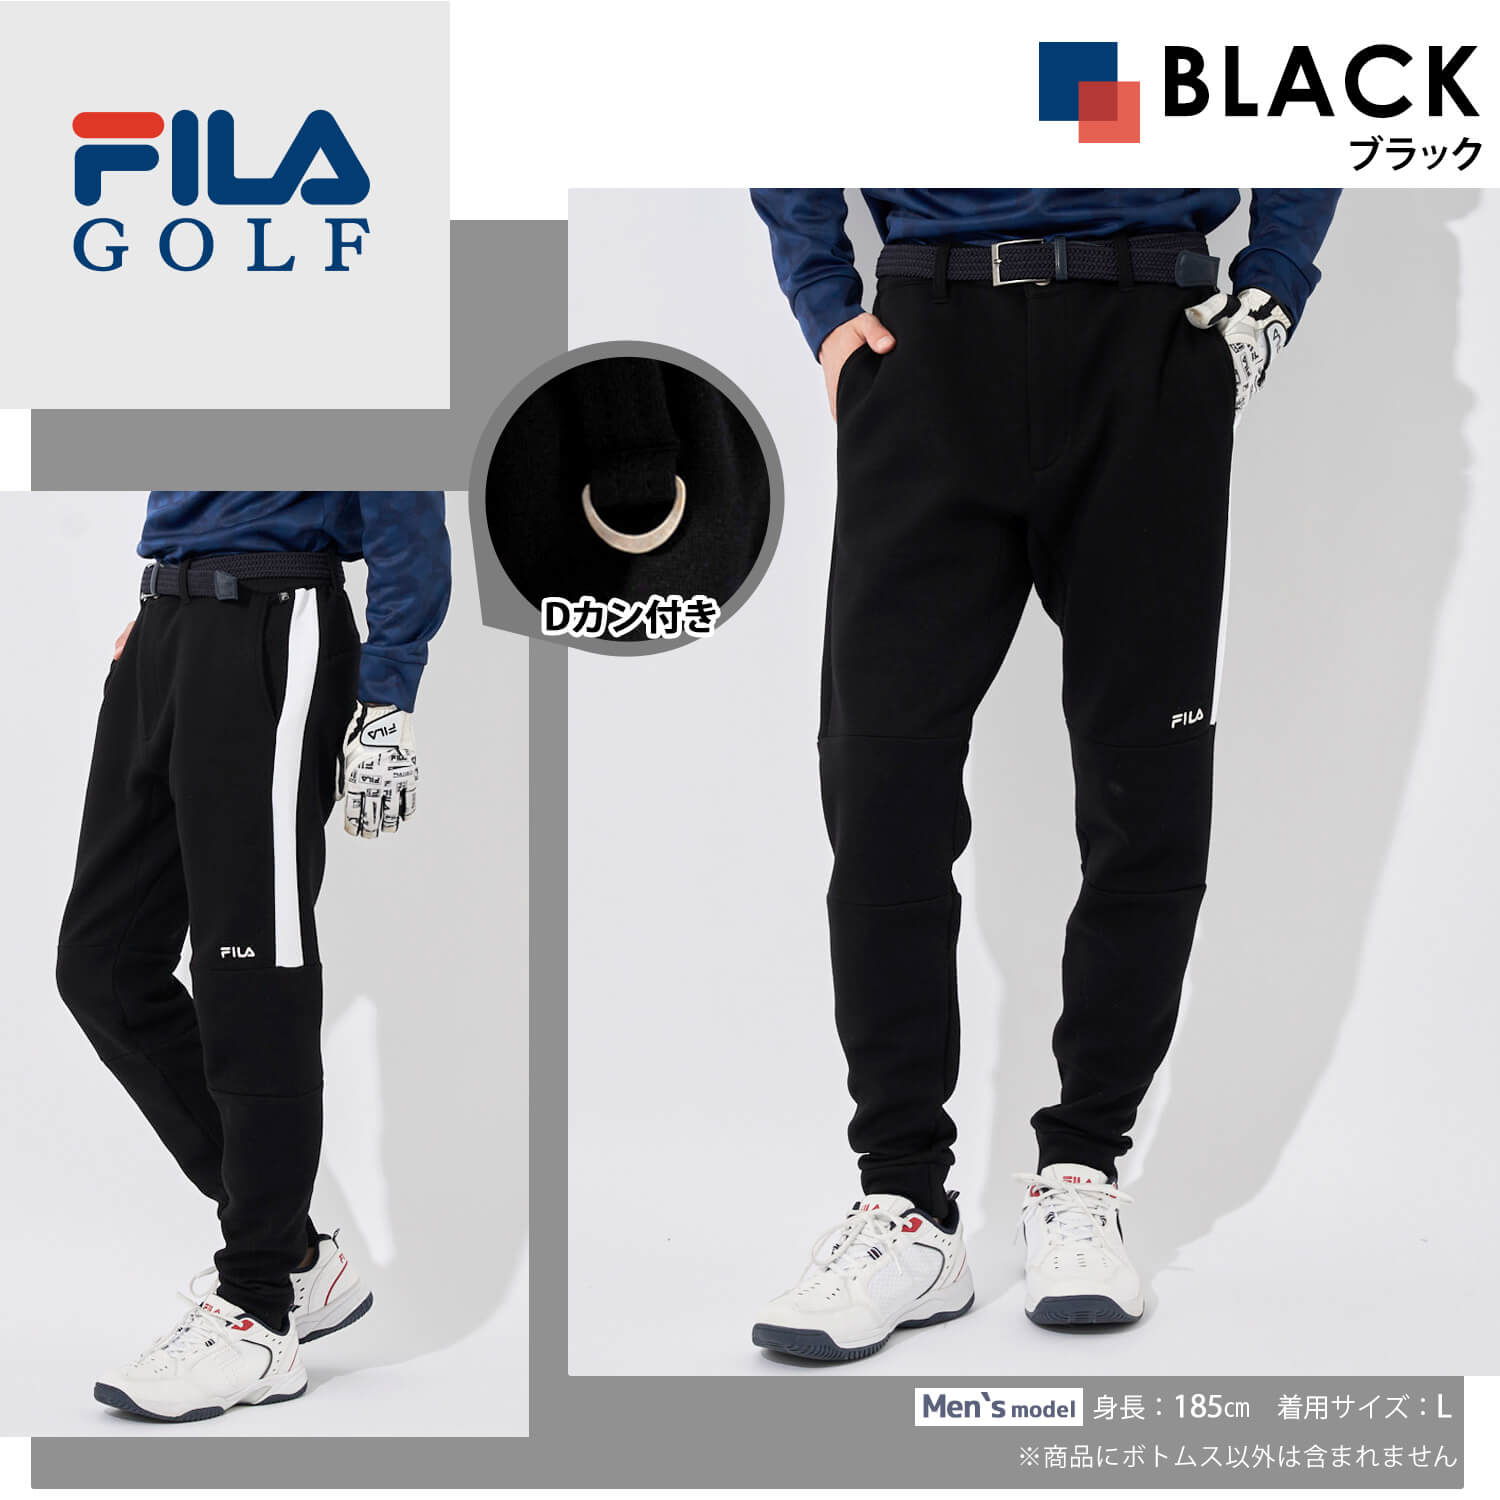 FILA GOLF フィラゴルフ ゴルフウェア ジョガーパンツ メンズ ブランド